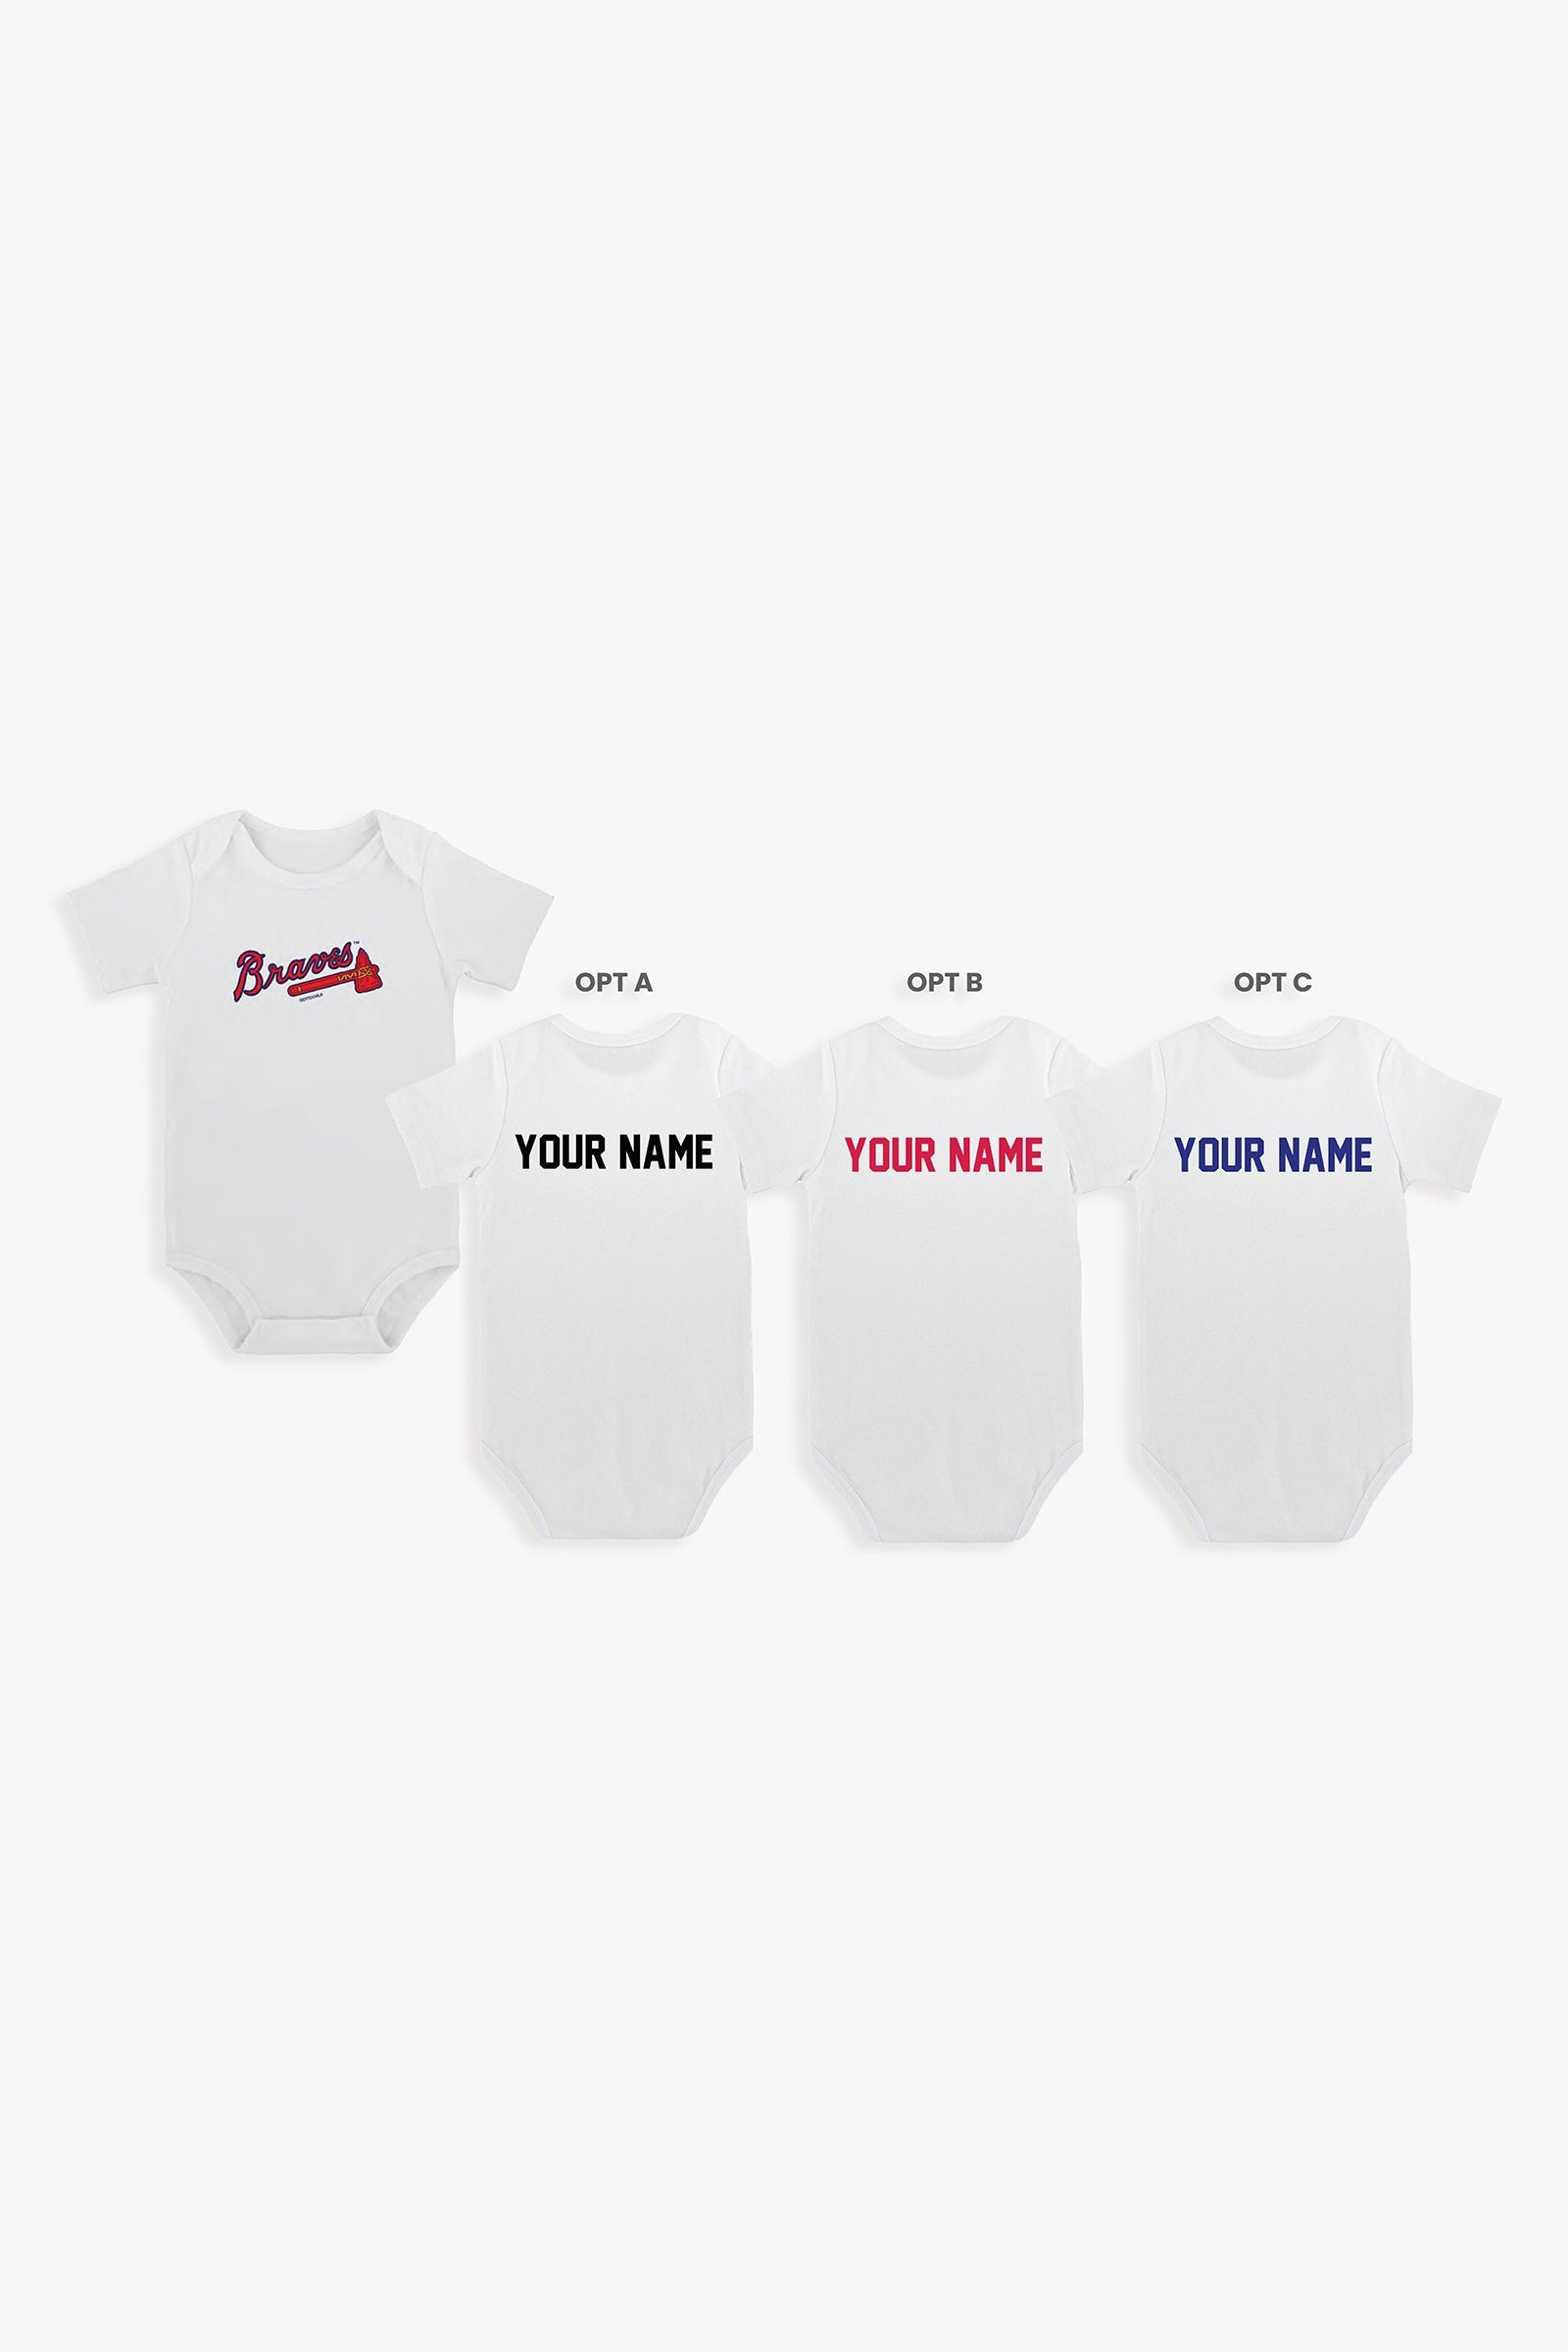 Gertex Customizable MLB Baby Bodysuit in White (9-12 Months)